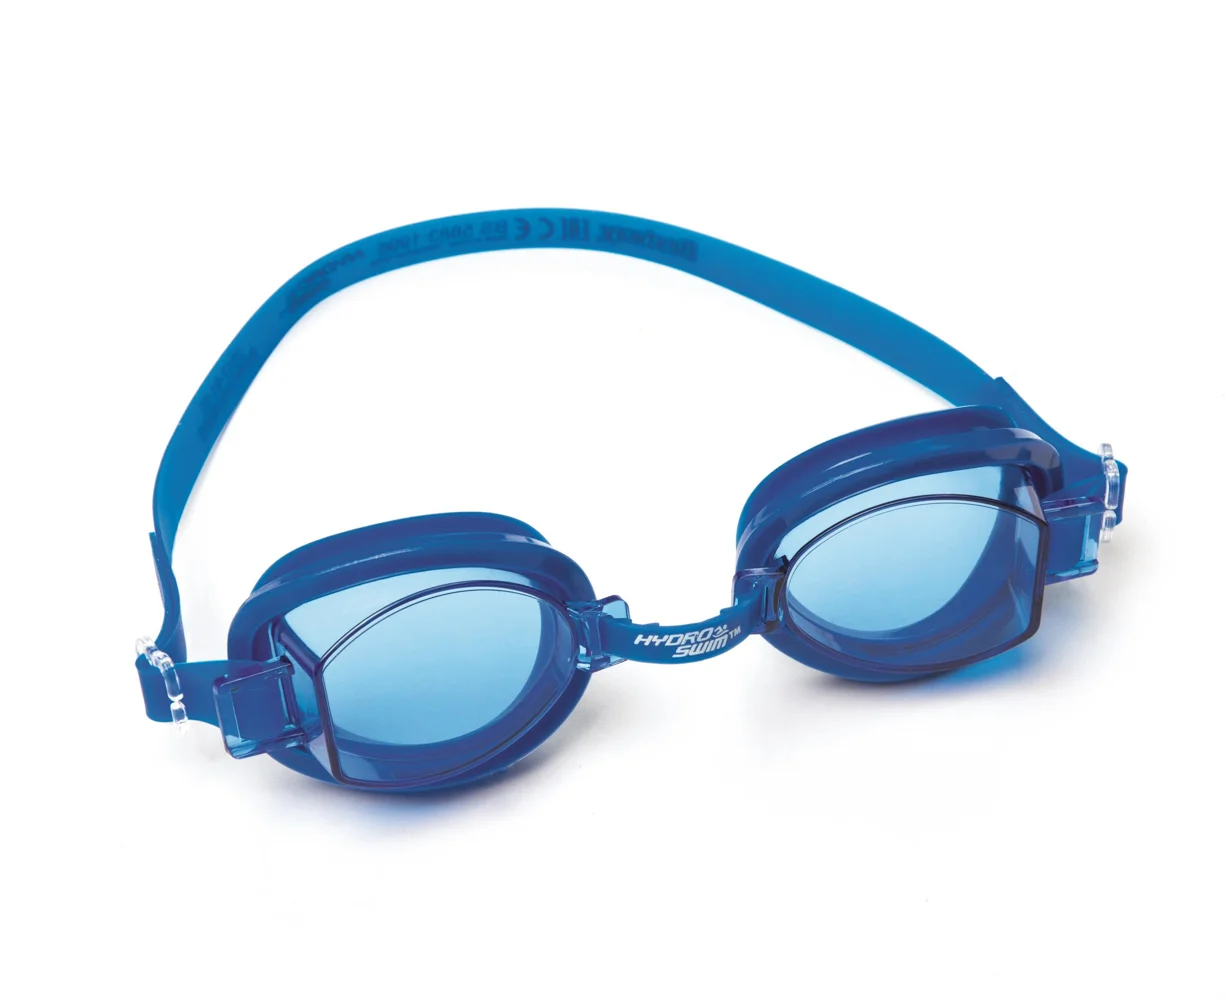 Plavecké brýle - mix 3 barvy (růžová, modrá, šedá)